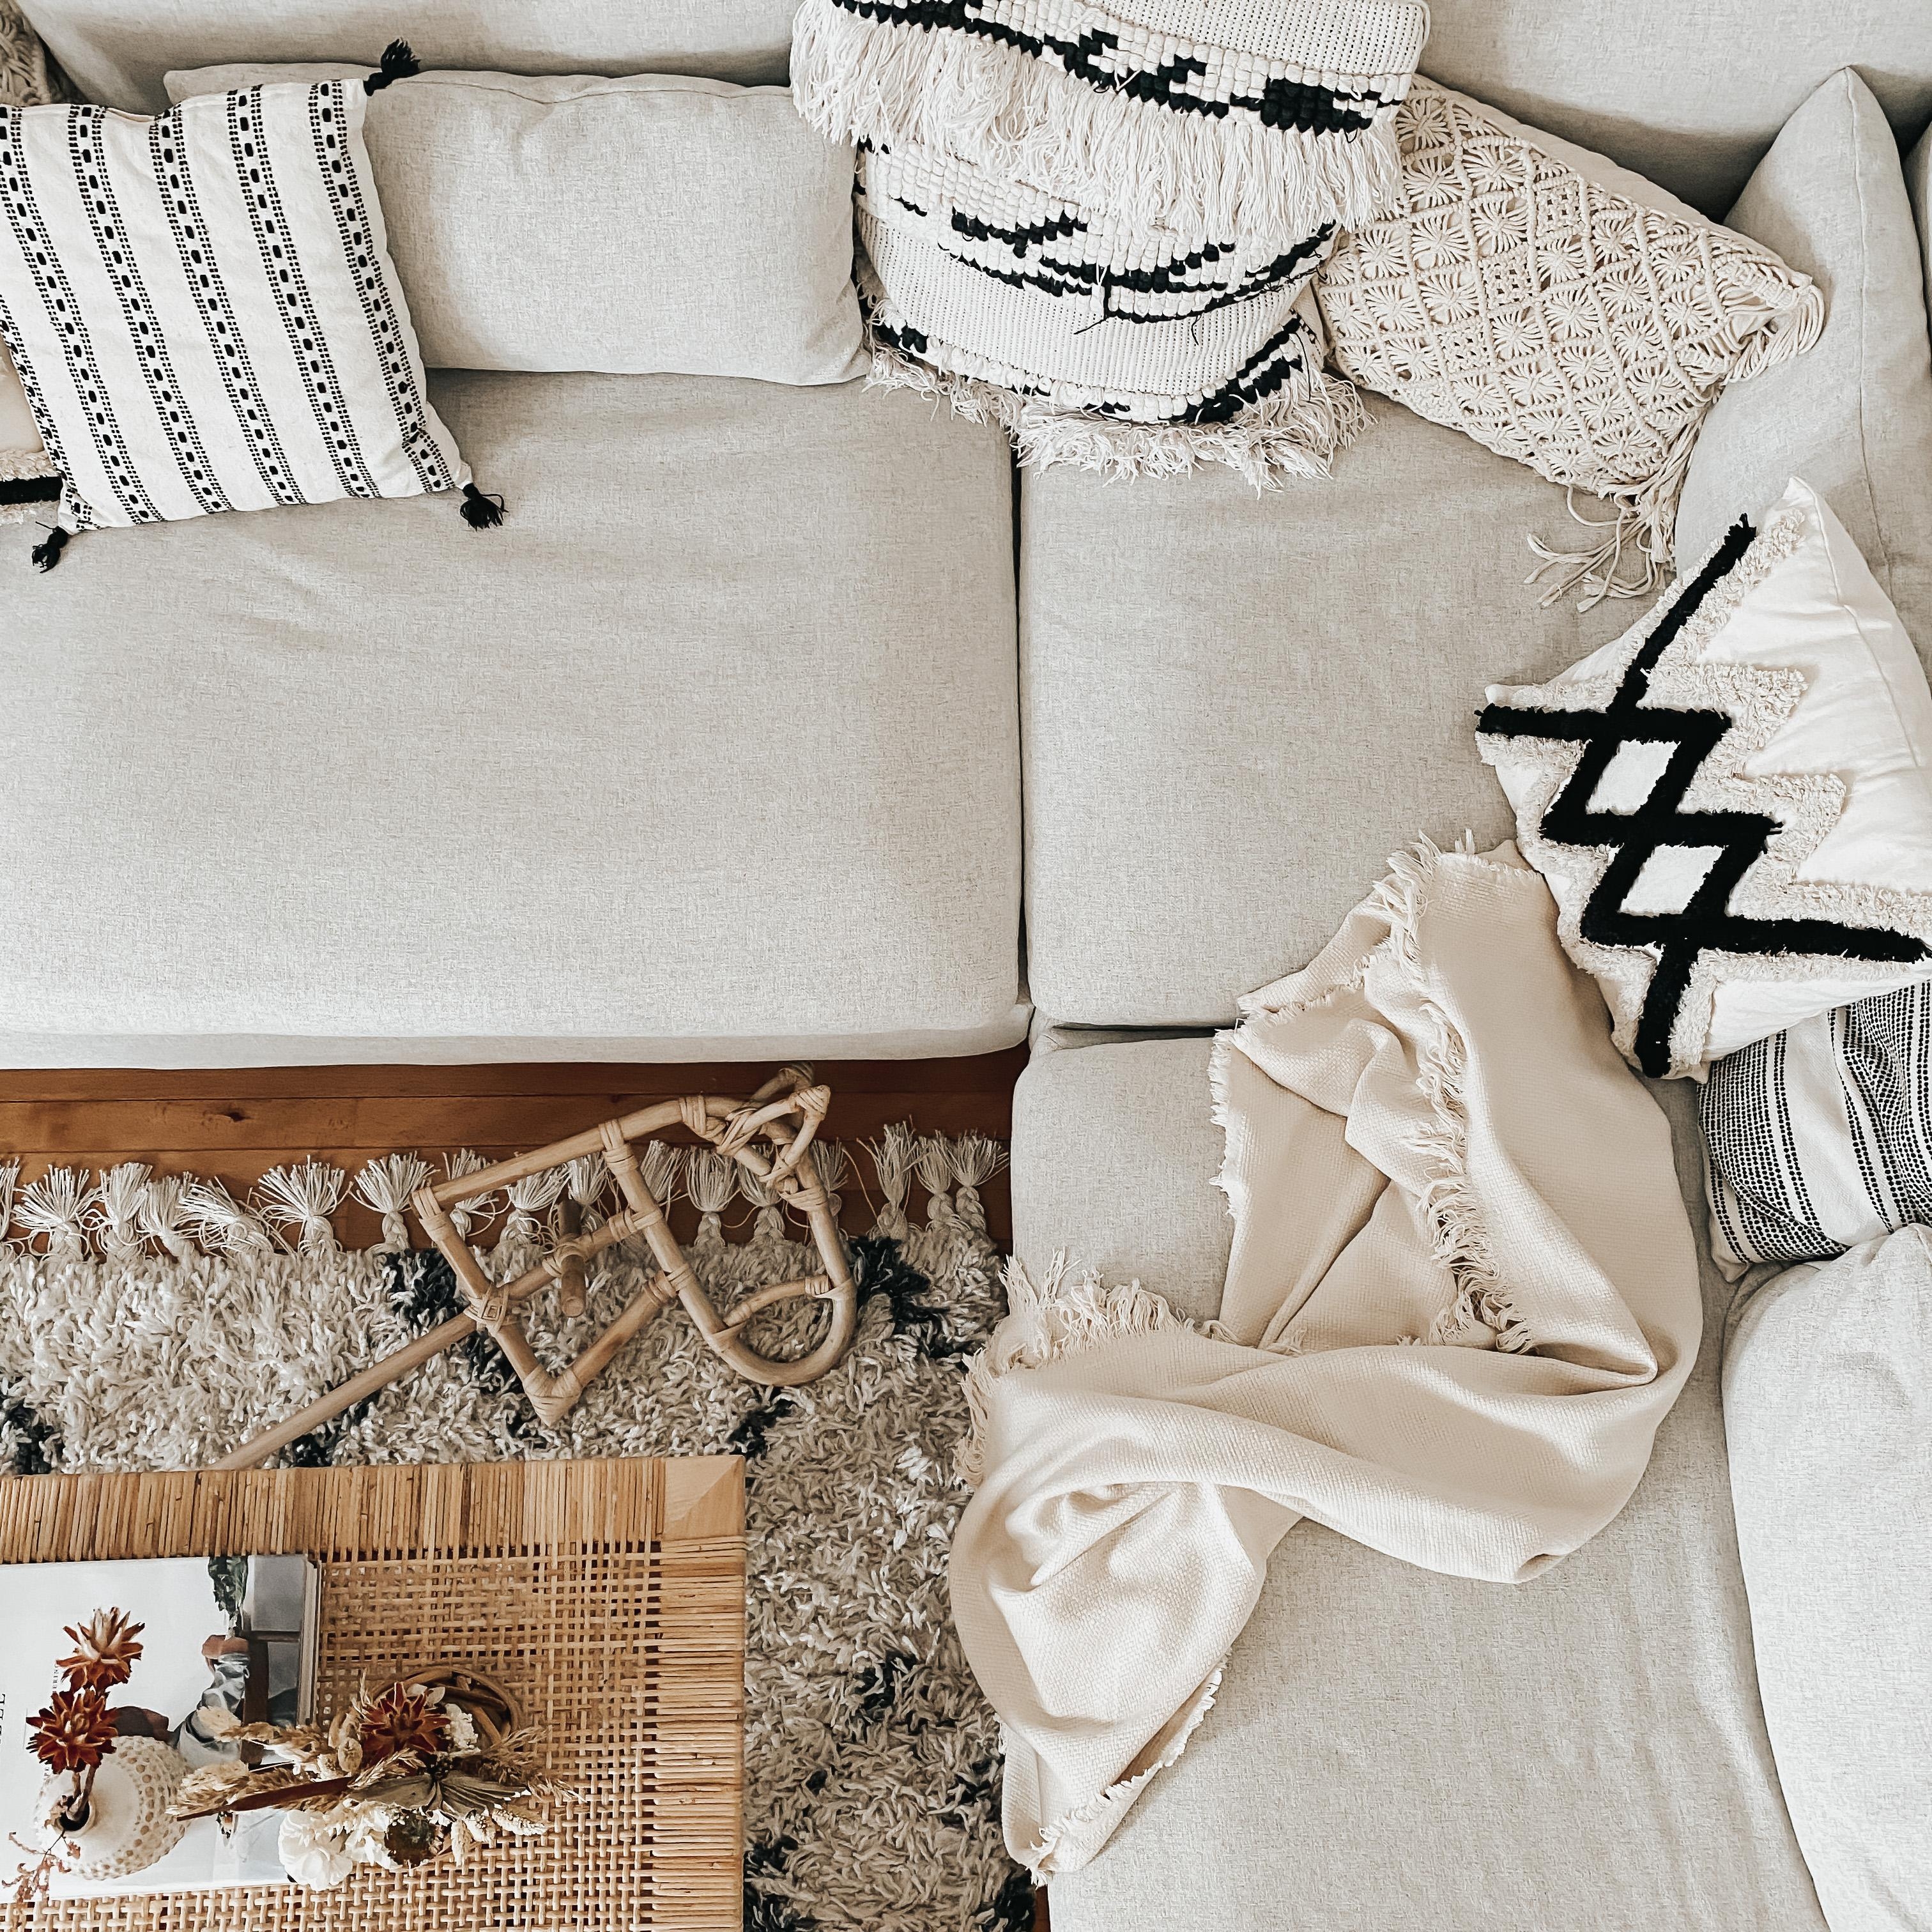 #wohnzimmer #couch #lieblingsecke #sofa #kissen #cozy #boho #rattan